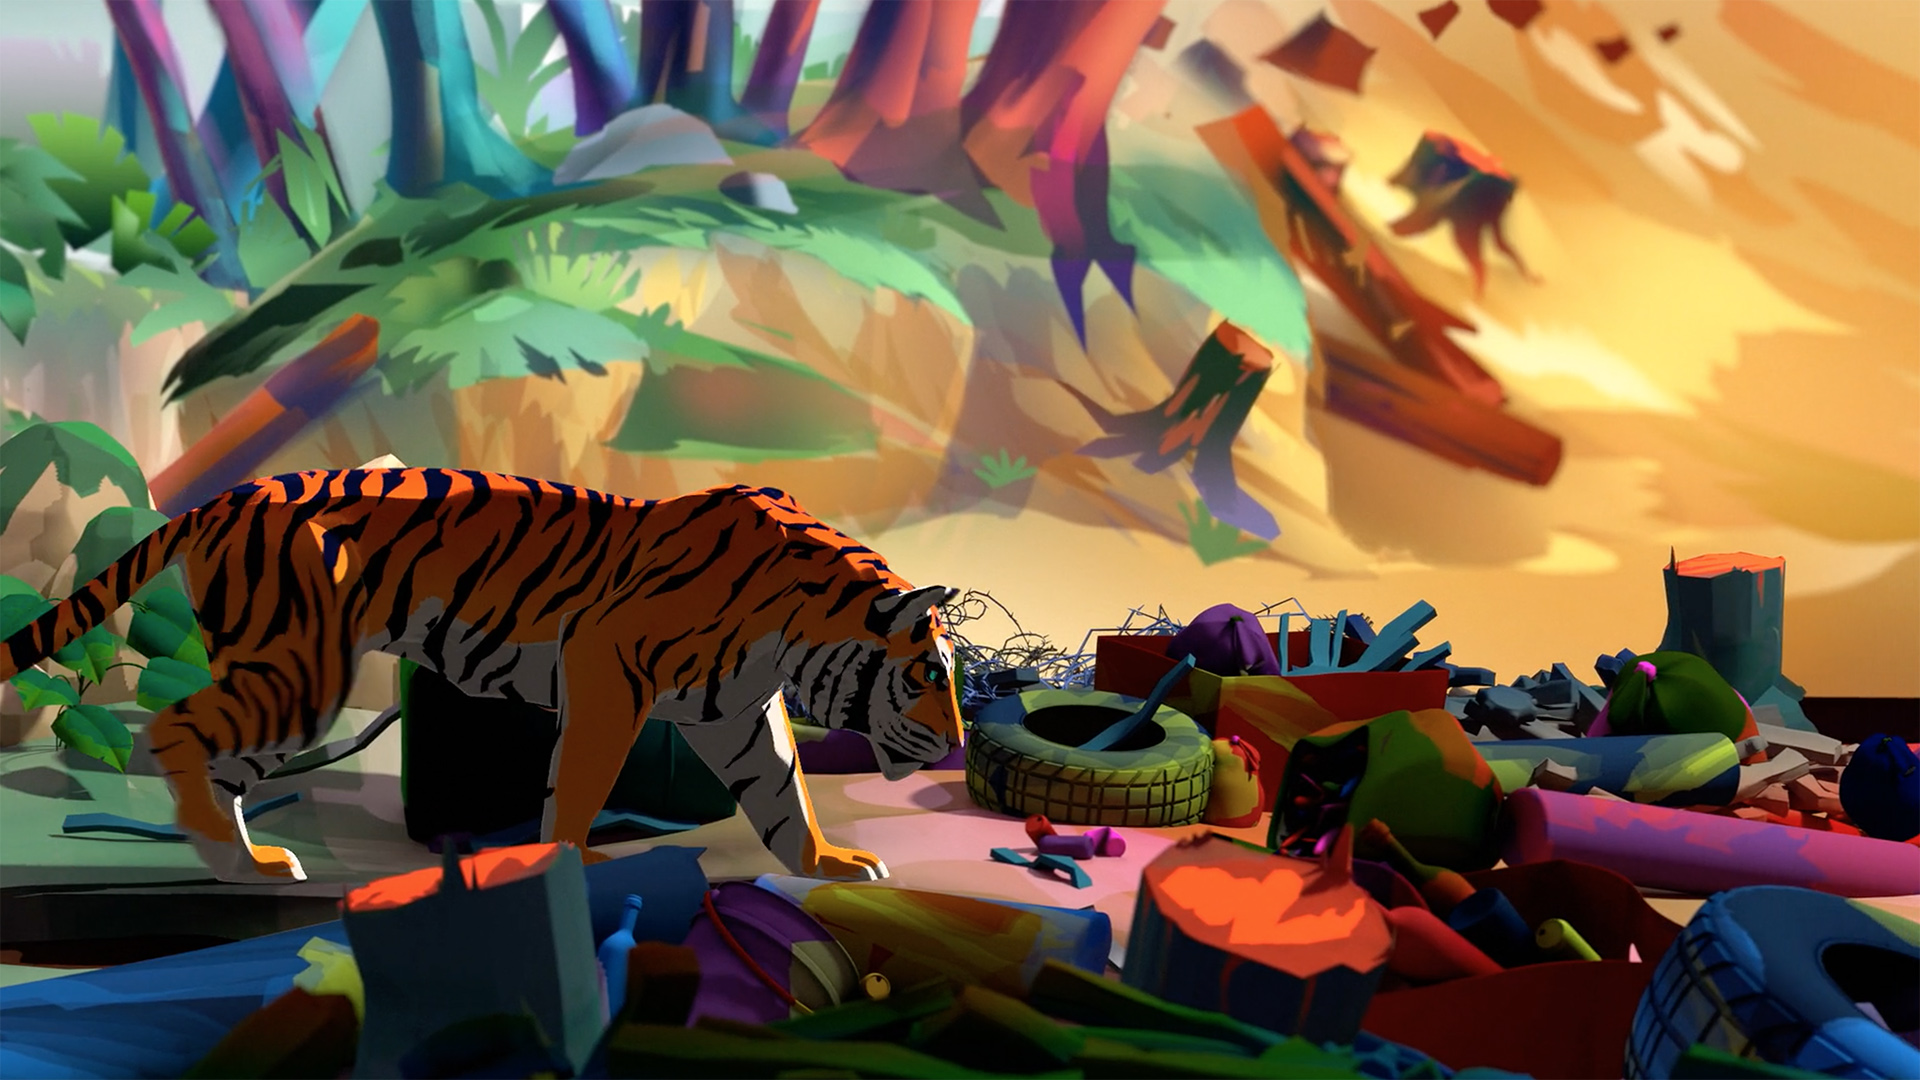 360 virtul animation of tiger walking through fantasy world